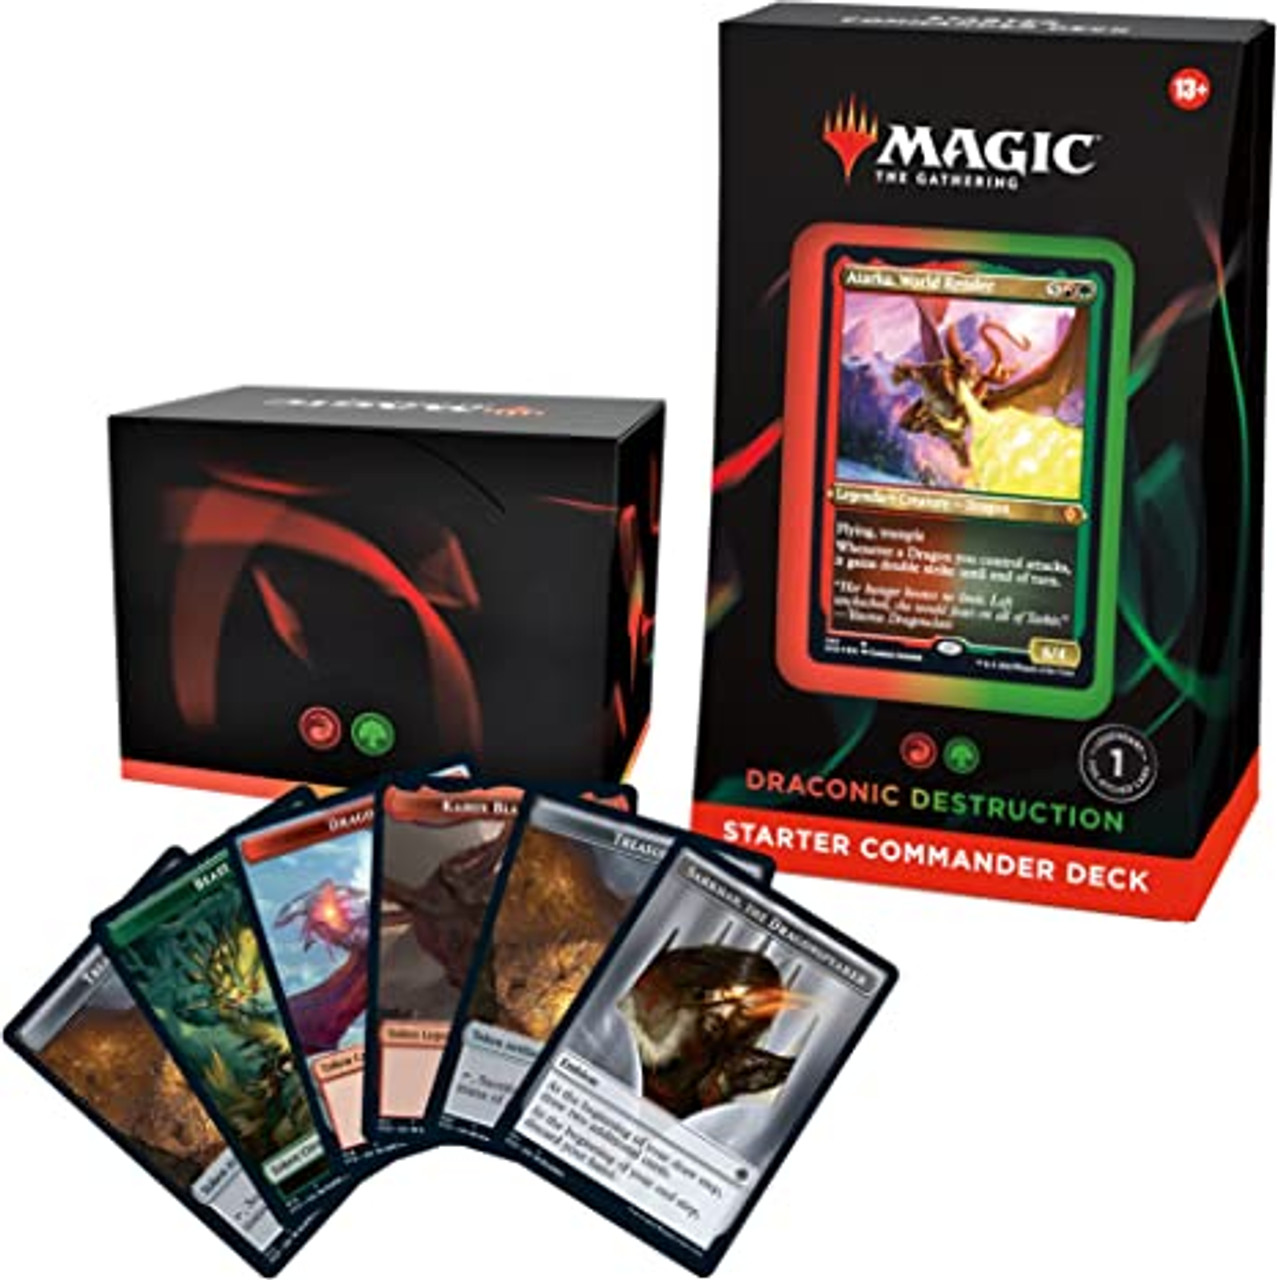 Magic: The Gathering Starter Commander Deck – Draconic Destruction (Red-Green)